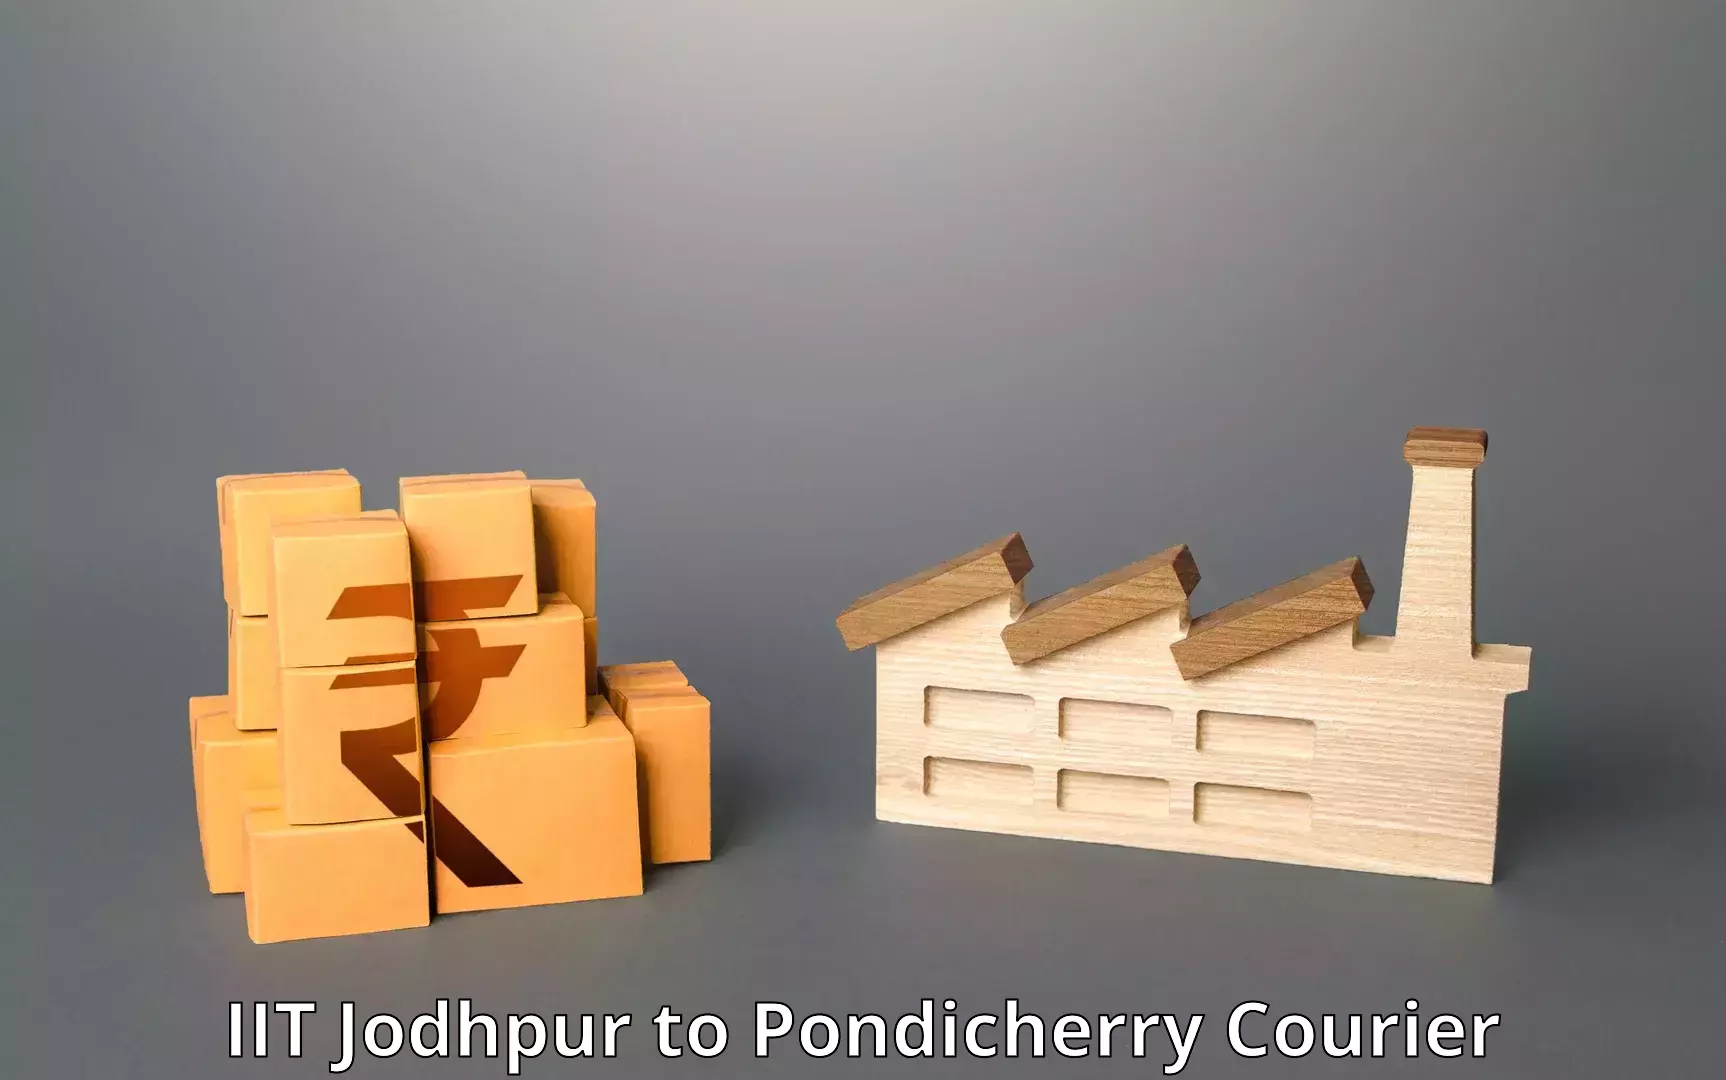 Subscription-based courier IIT Jodhpur to Pondicherry